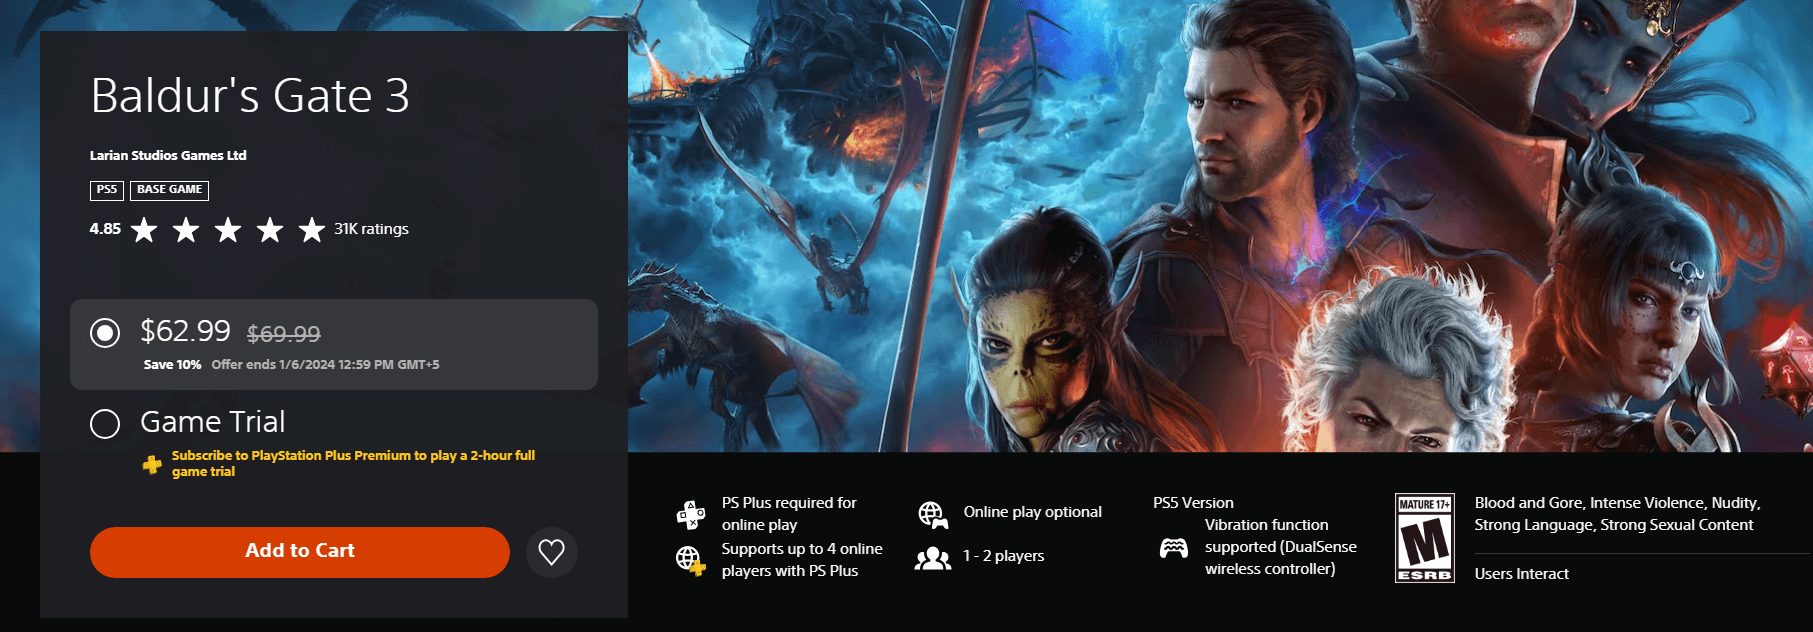 Baldur's Gate 3 on the PlayStation Store